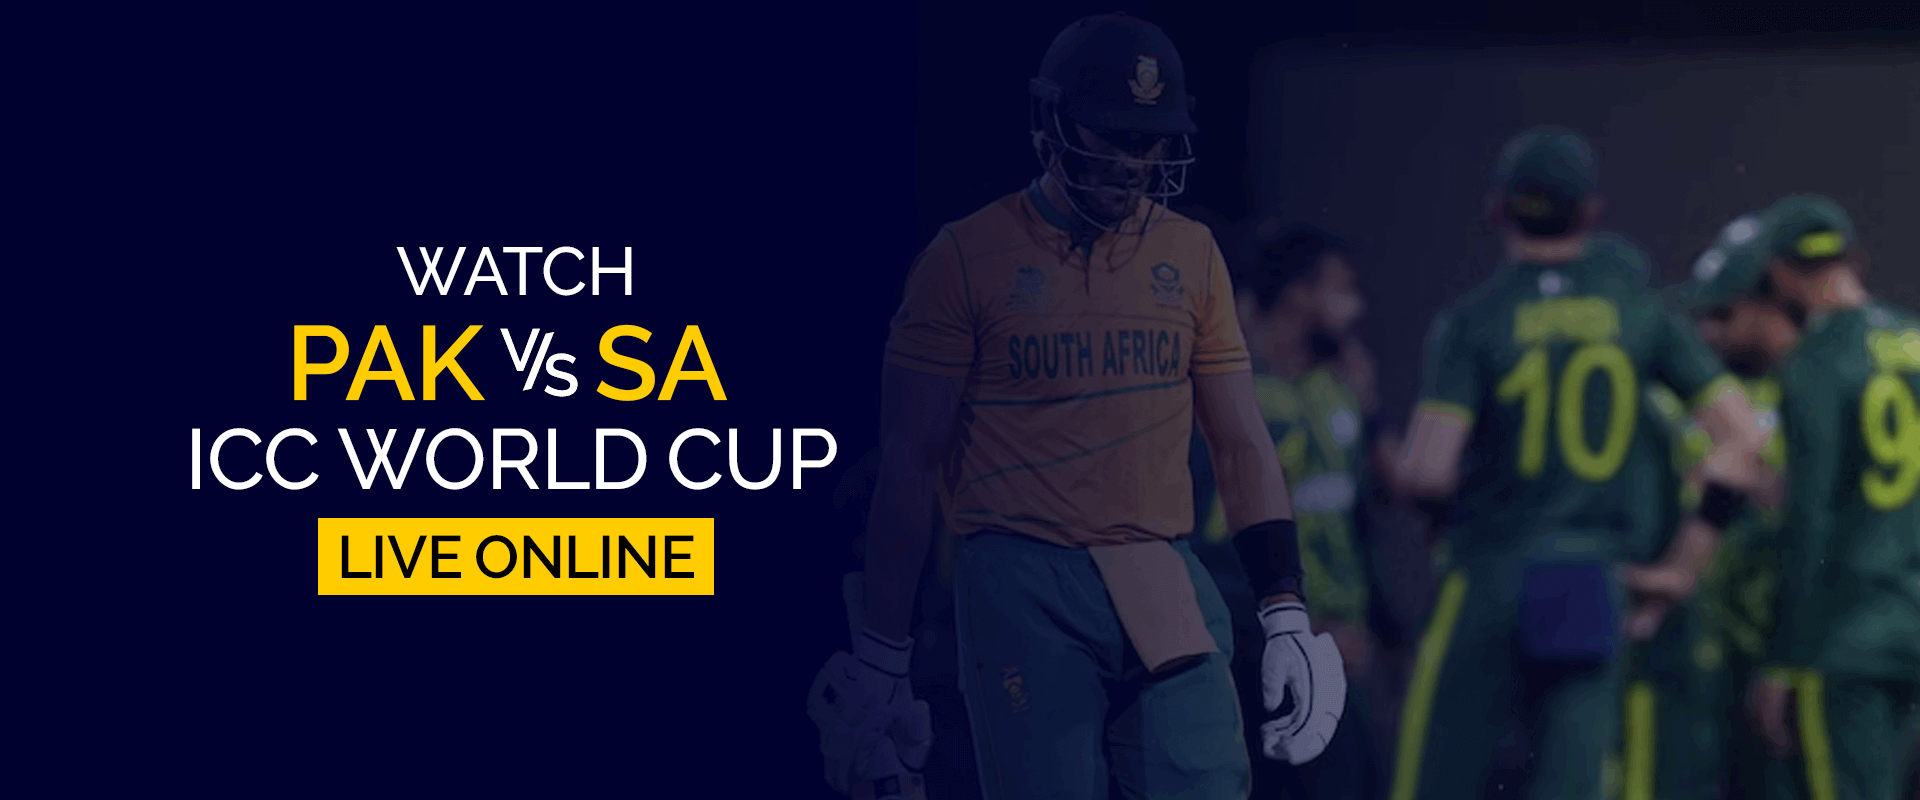 Vea la Copa Mundial ICC de Pakistán vs Sudáfrica en vivo en línea